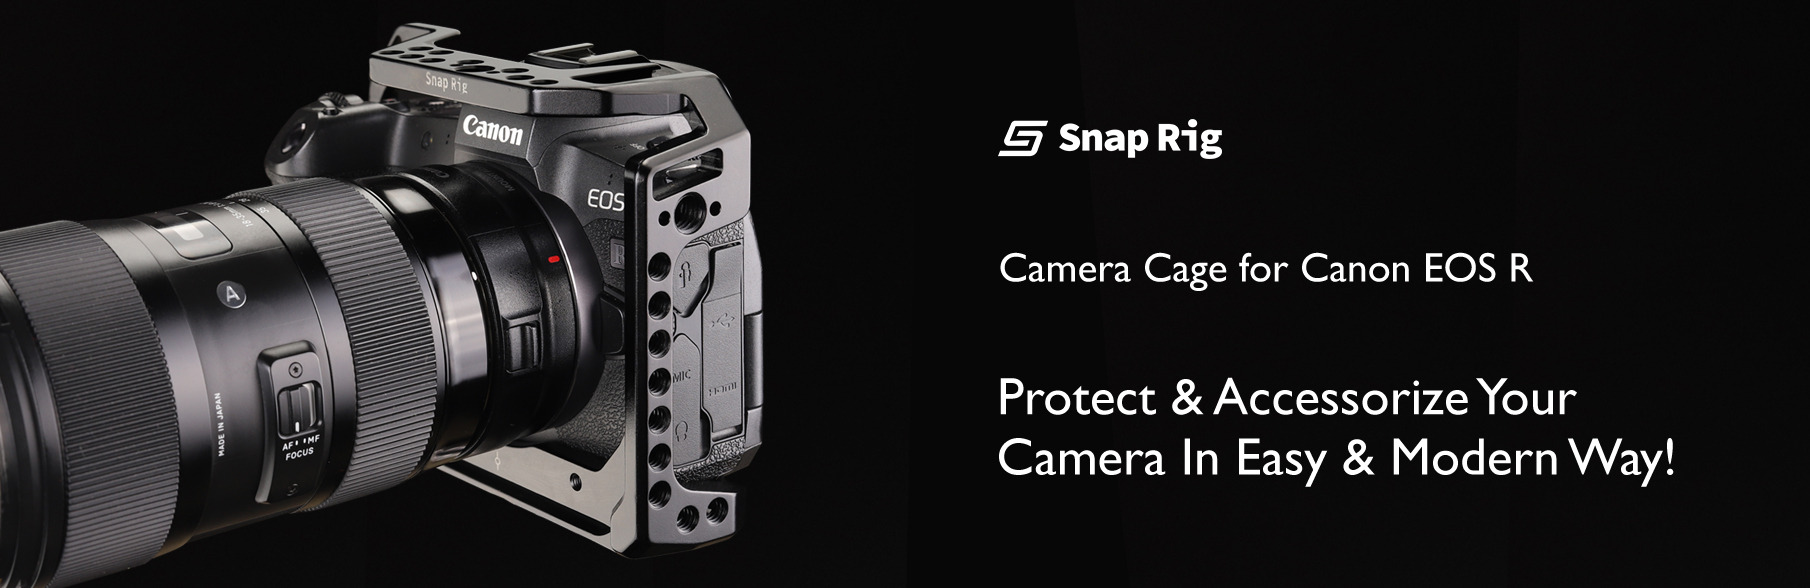 Proaim SnapRig Camera Cage for Canon EOS R CG210